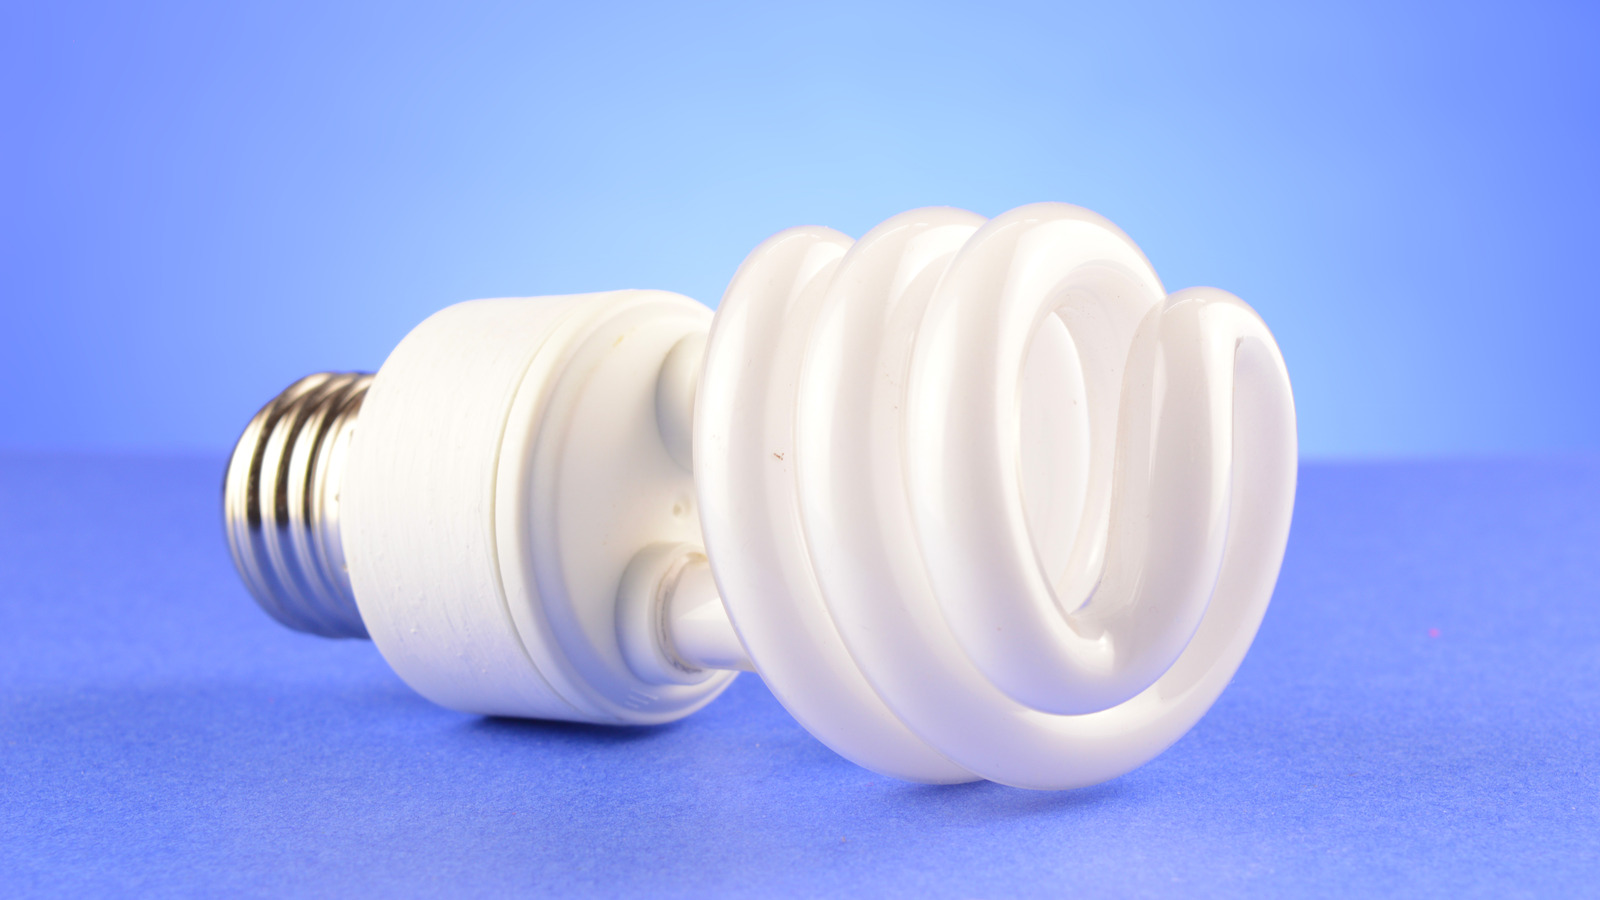 Using Cfl Light Bulbs